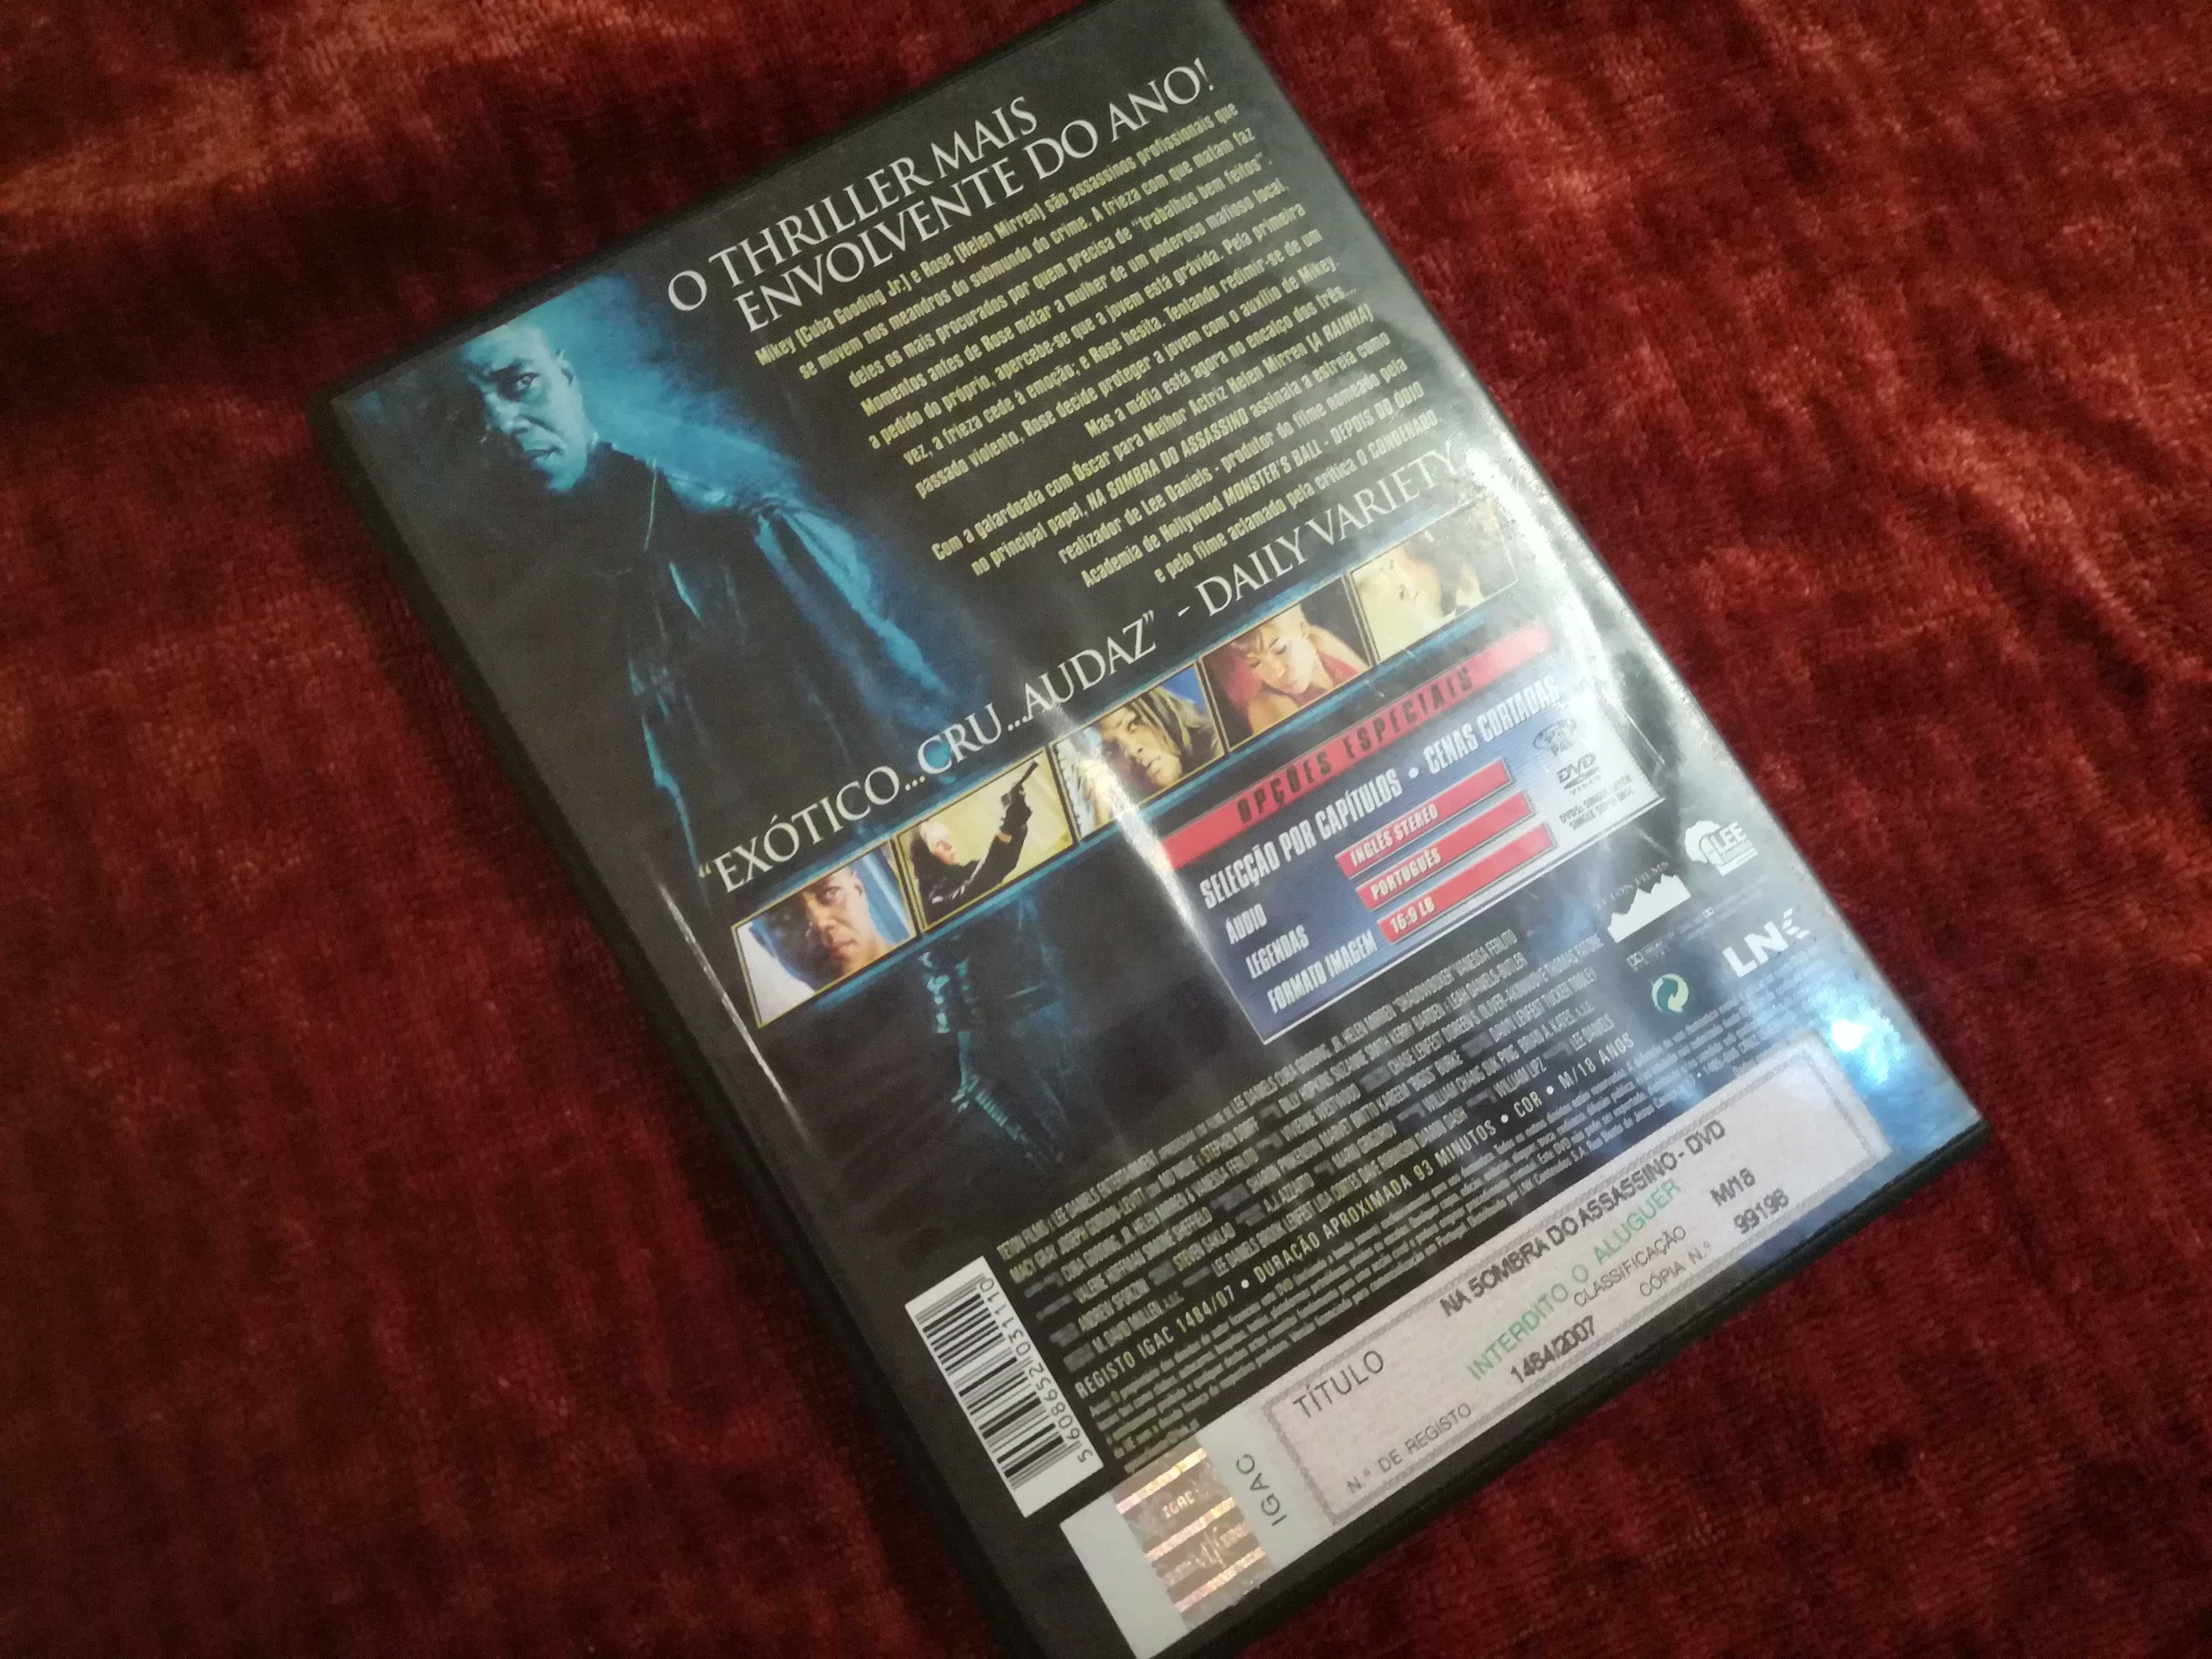 Na Sombra do Assassino (Shadowboxer) de Lee Daniels, com Helen Mirren